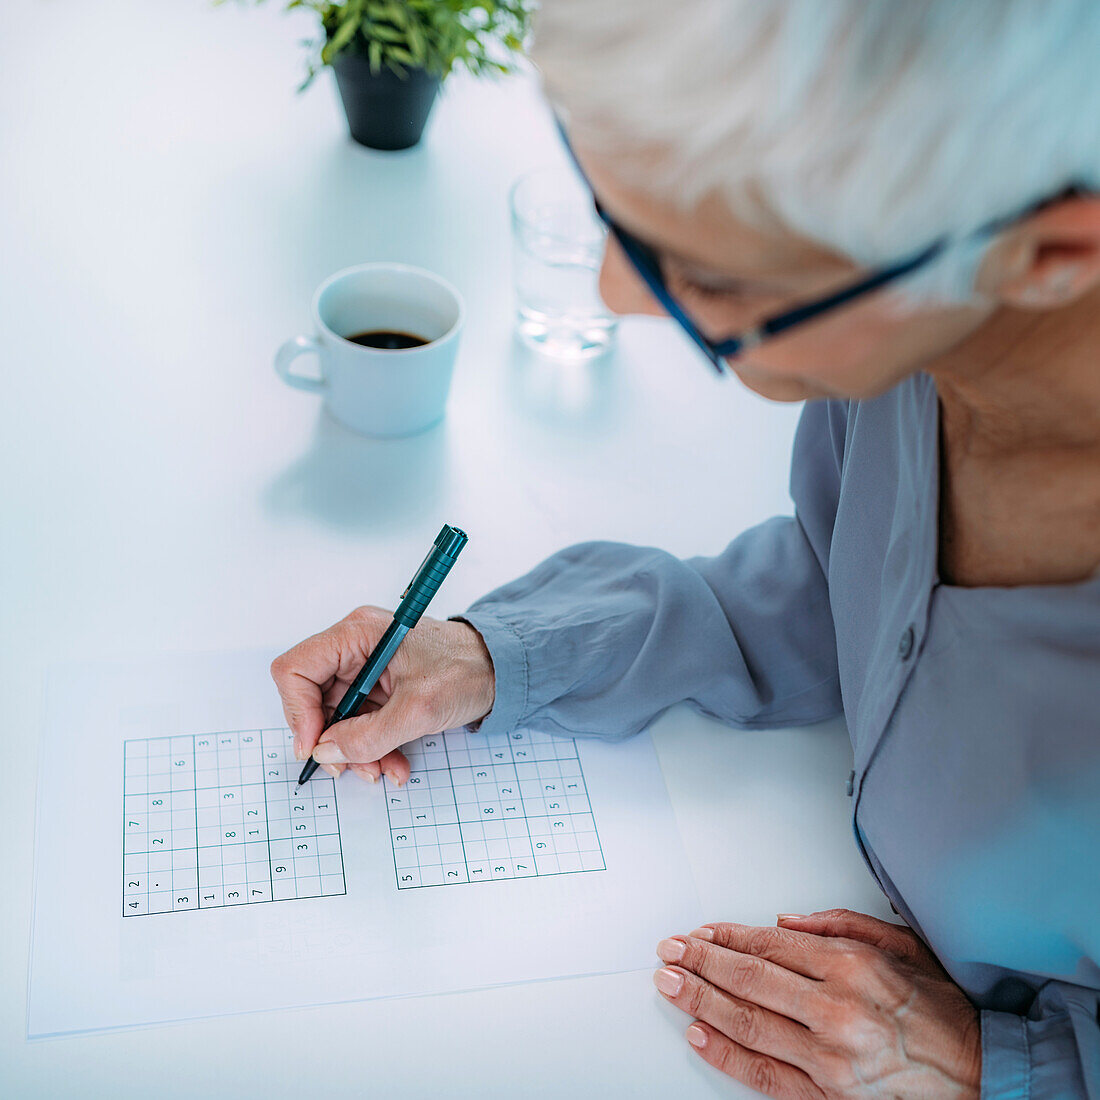 Senior woman solving sudoku puzzle